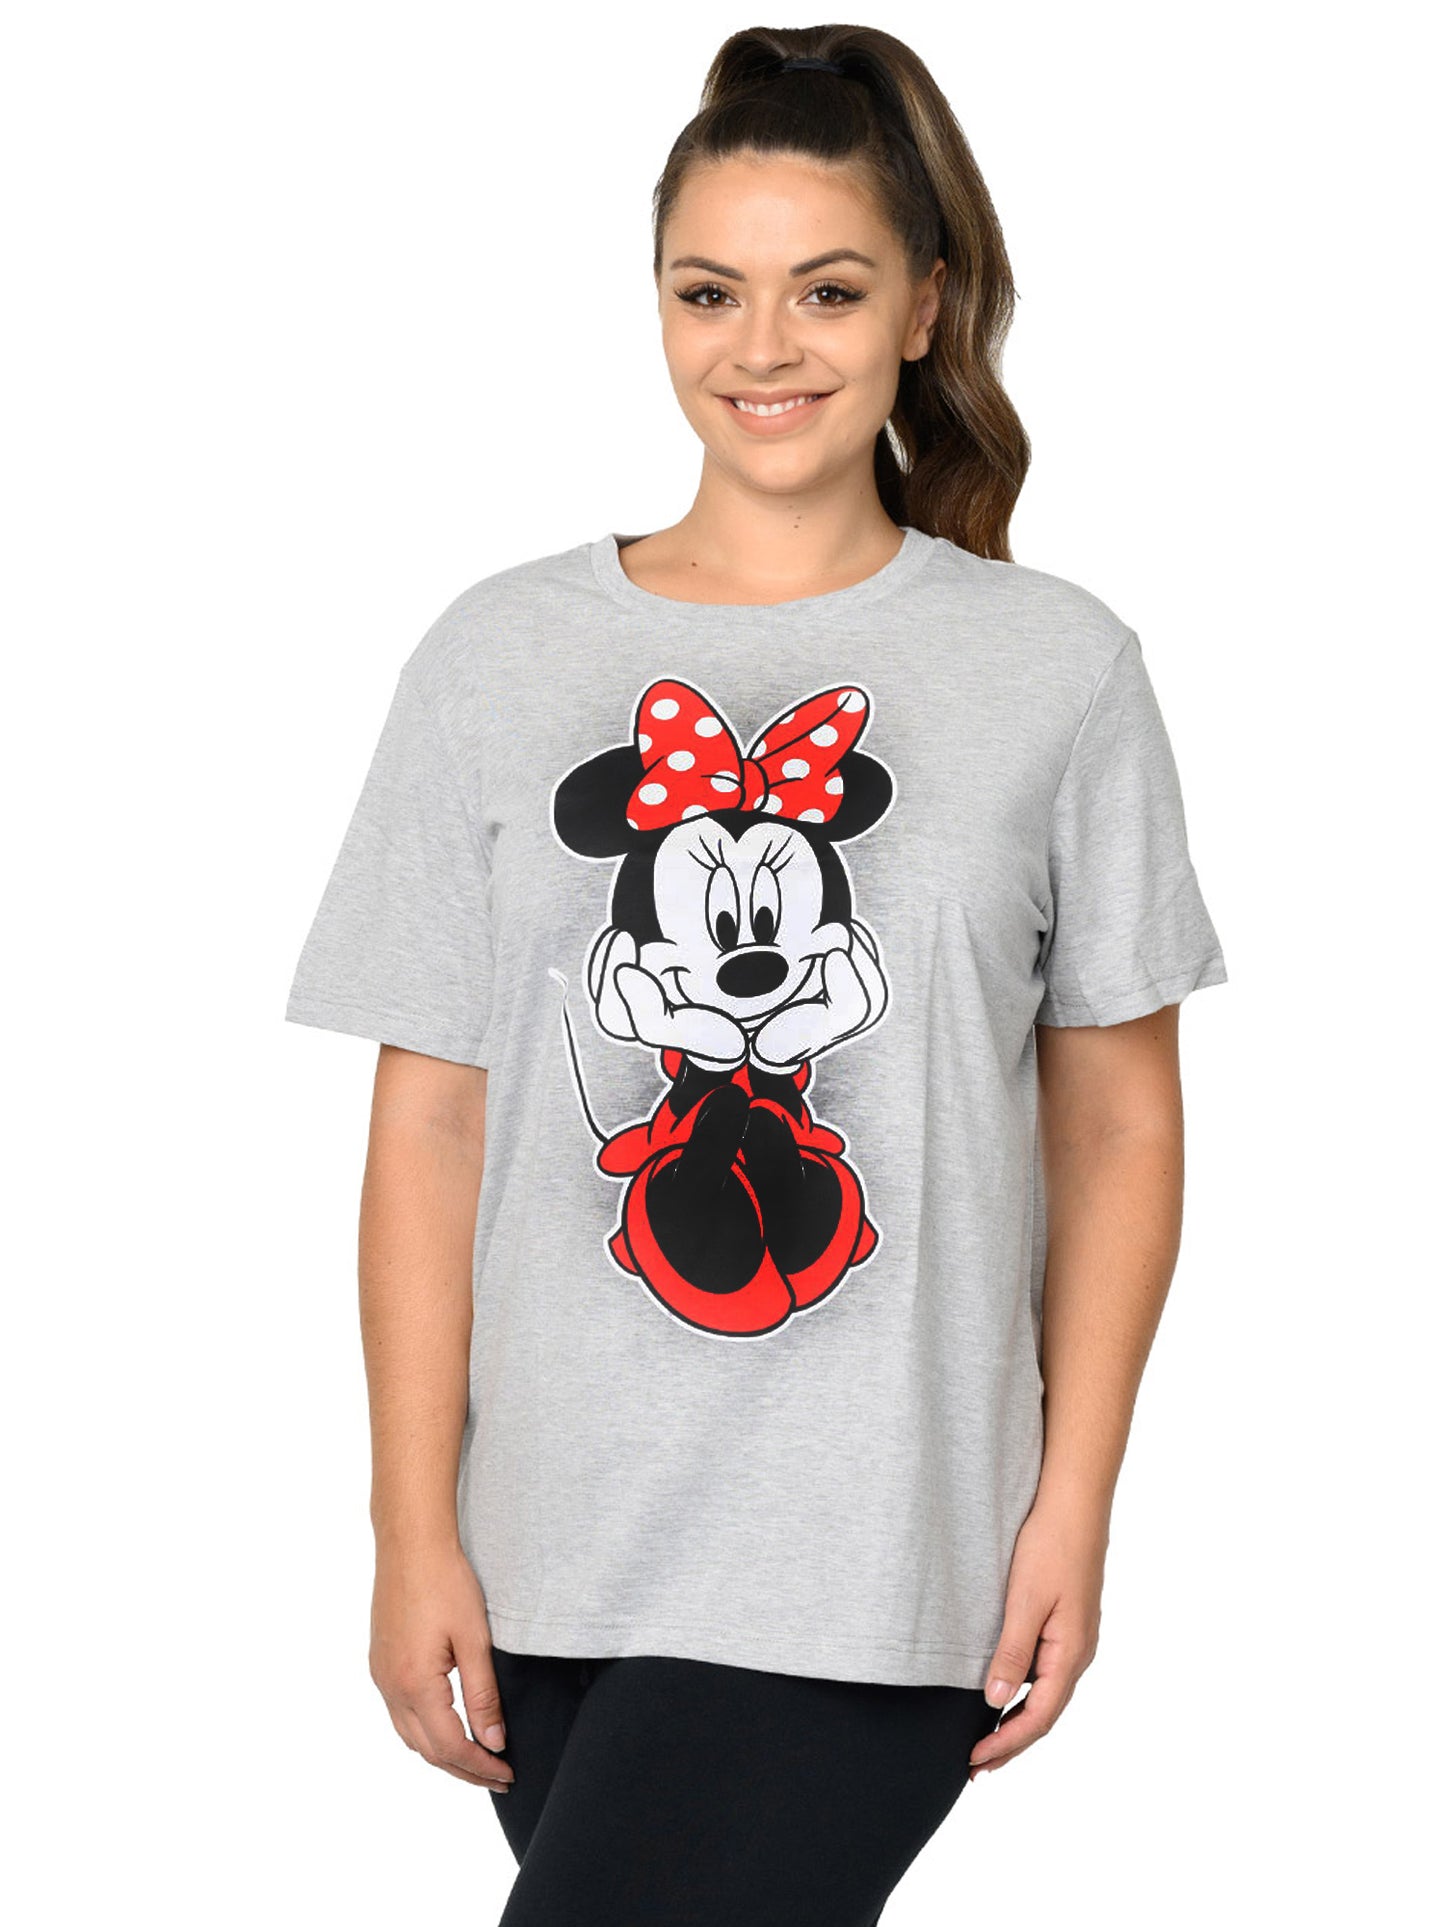 Women's Plus Size Disney Minnie Mouse Sitting Short Sleeve T-Shirt Gray